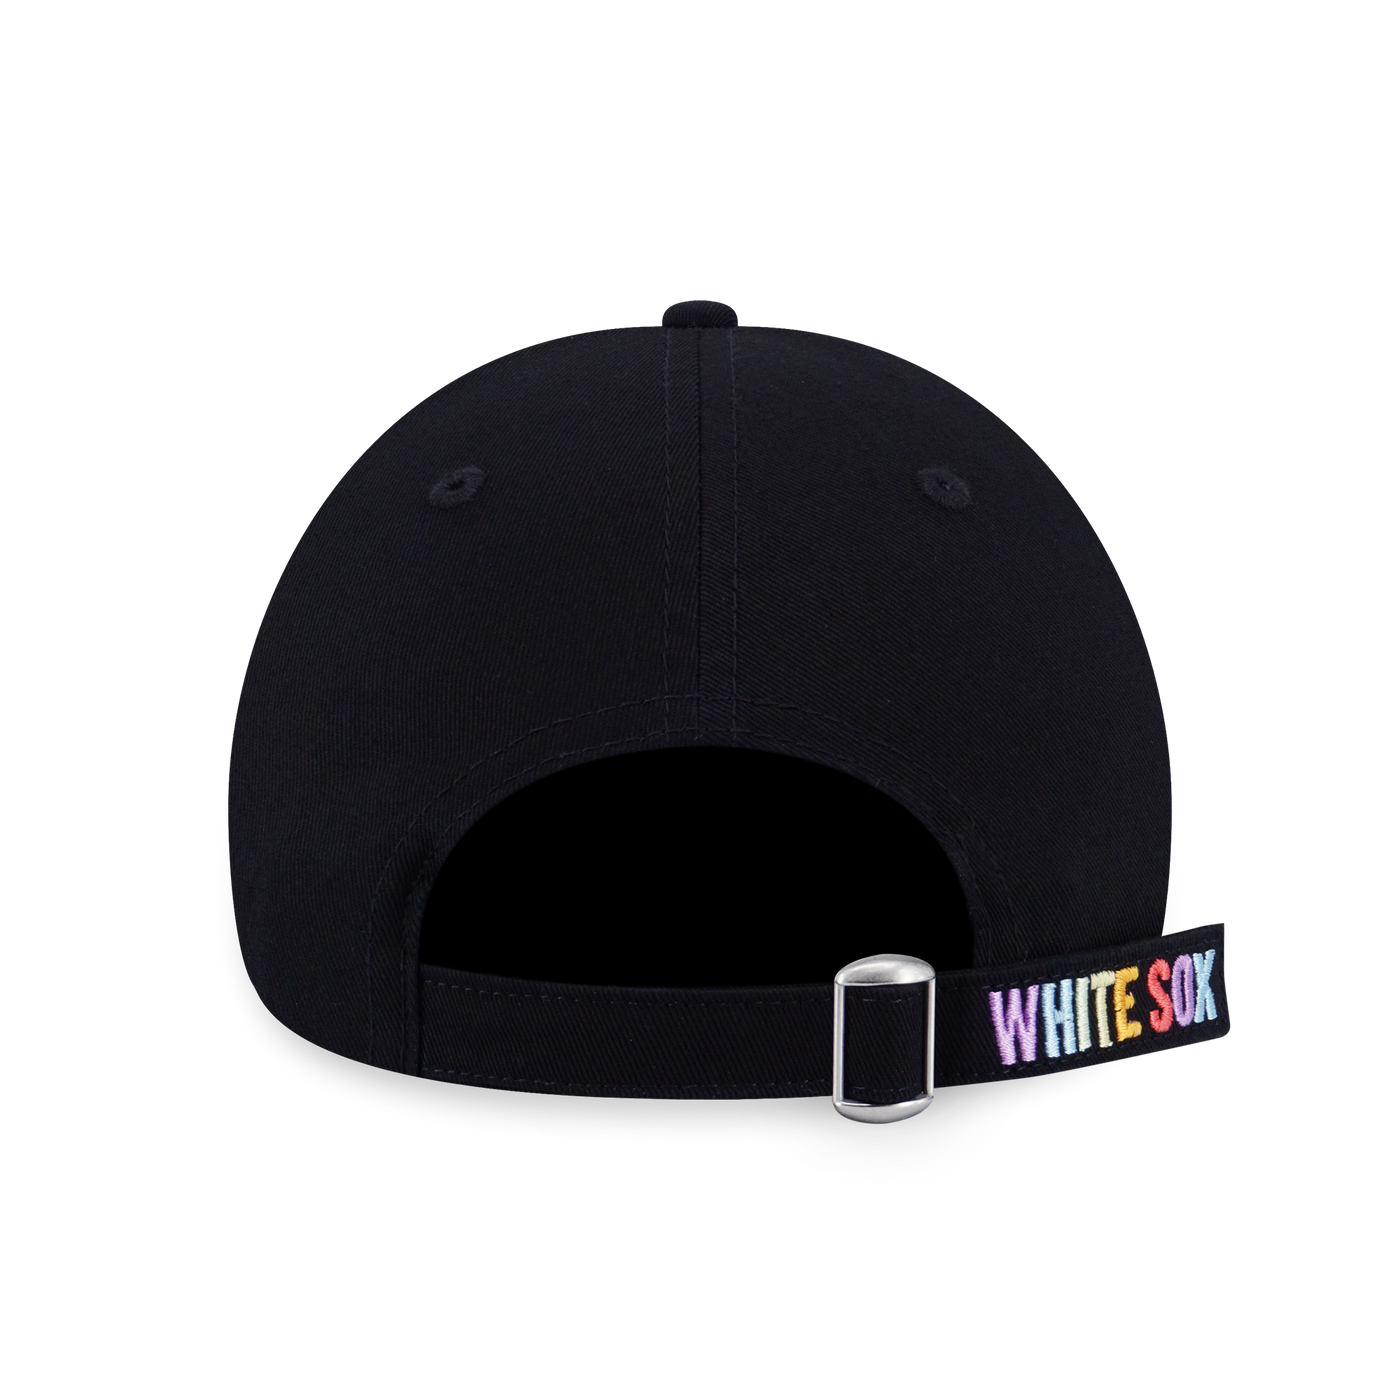 CHICAGO WHITE SOX LIGHT RAINBOW LAYERED LOGO BLACK 9TWENTY CAP